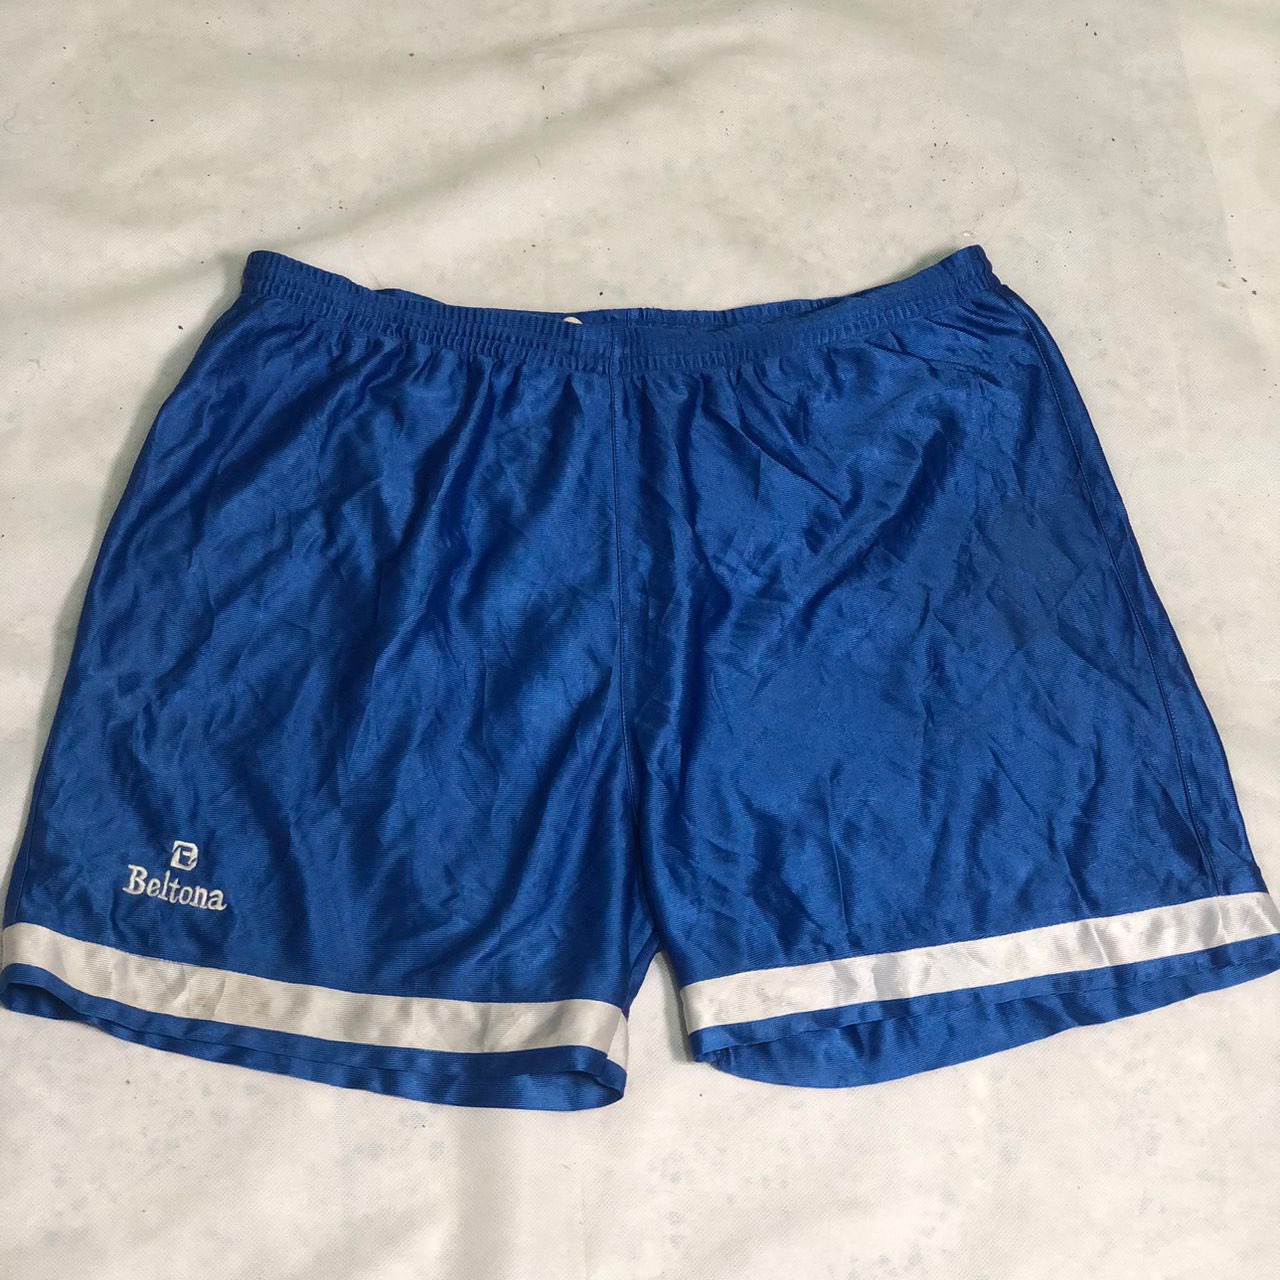 Branded Shorts 50 pc Bundle